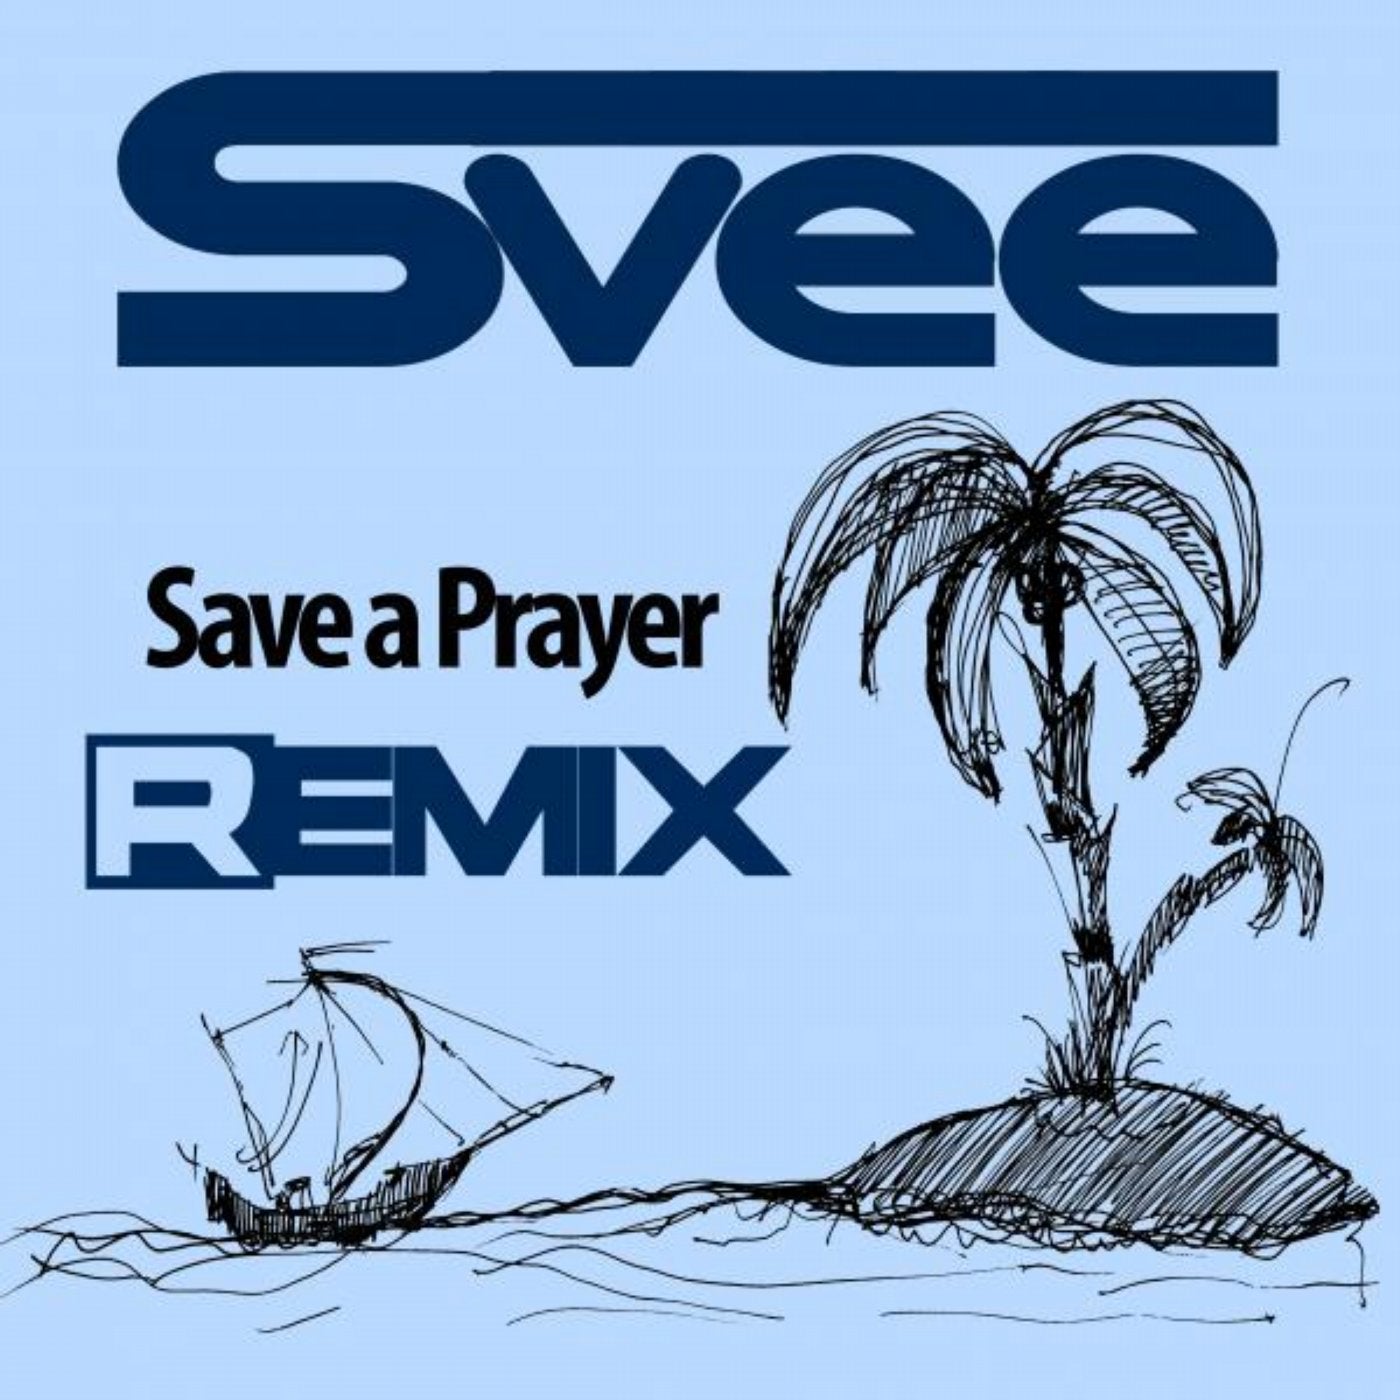 Svee Save a Prayer Remix